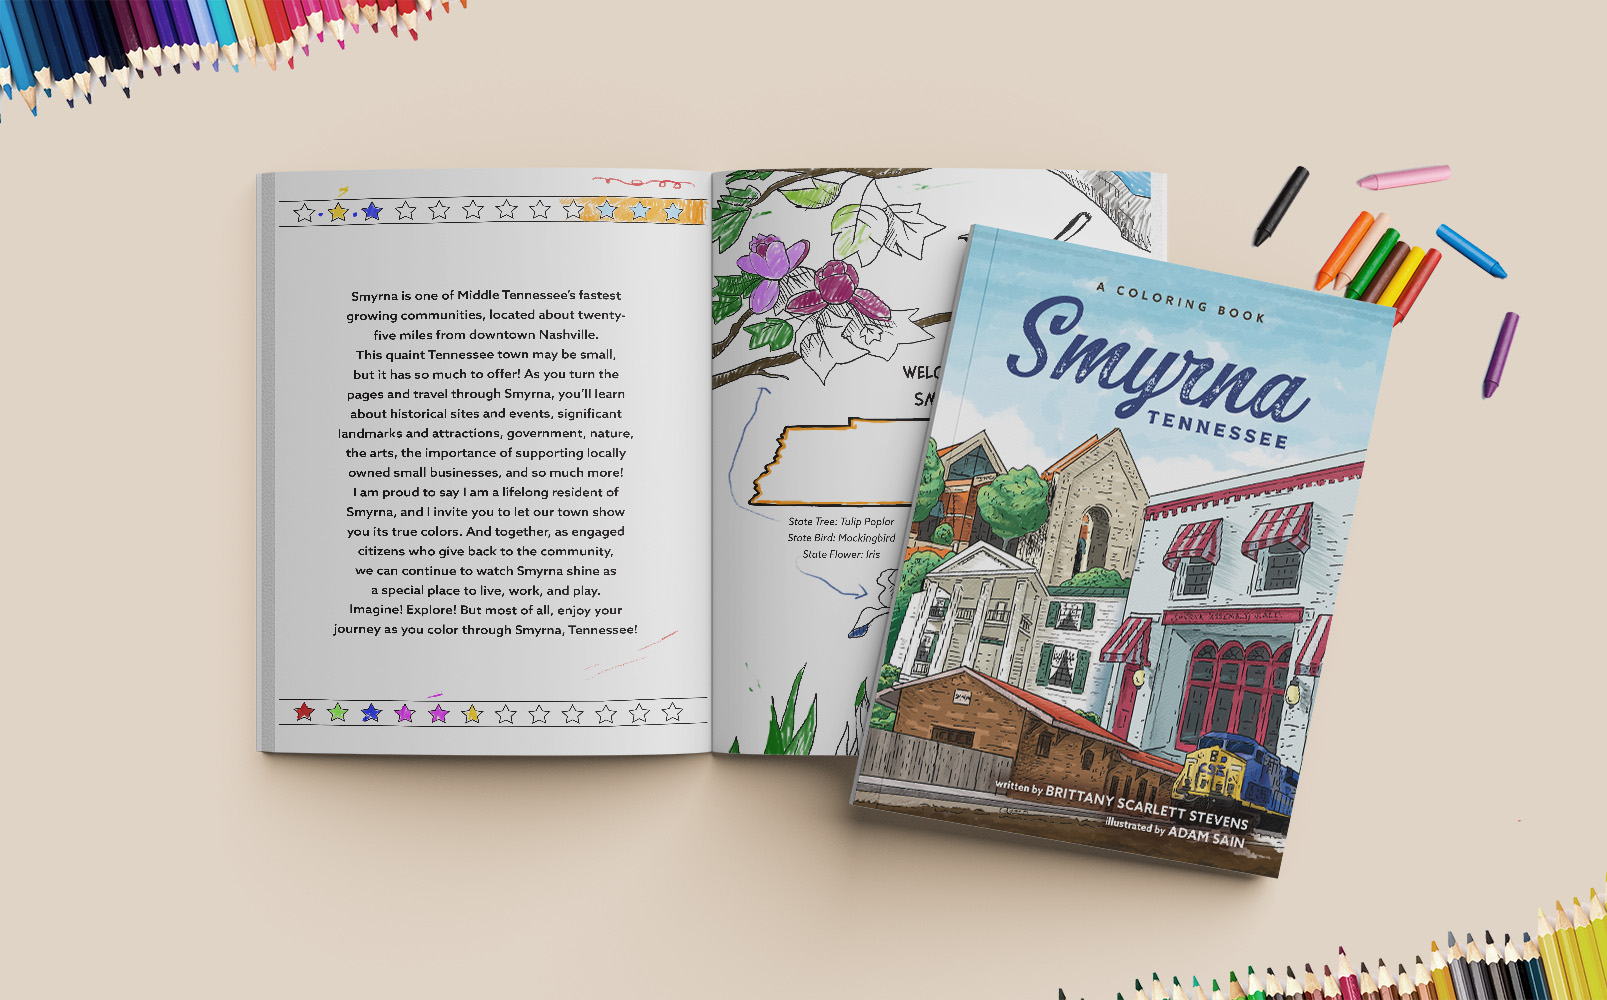 Smyrna, Tennessee - a coloring book cover and interior design